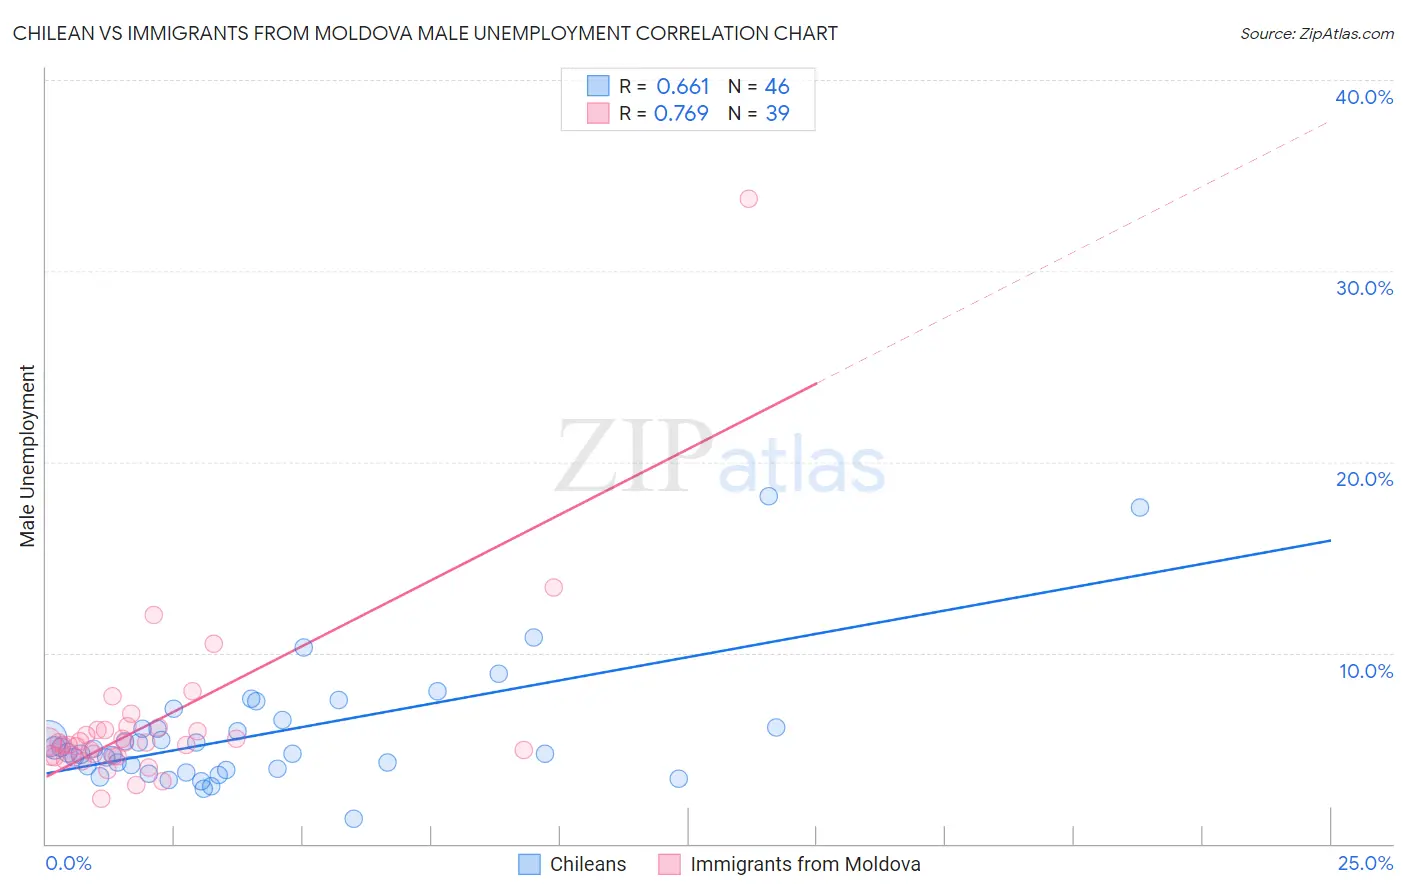 Chilean vs Immigrants from Moldova Male Unemployment